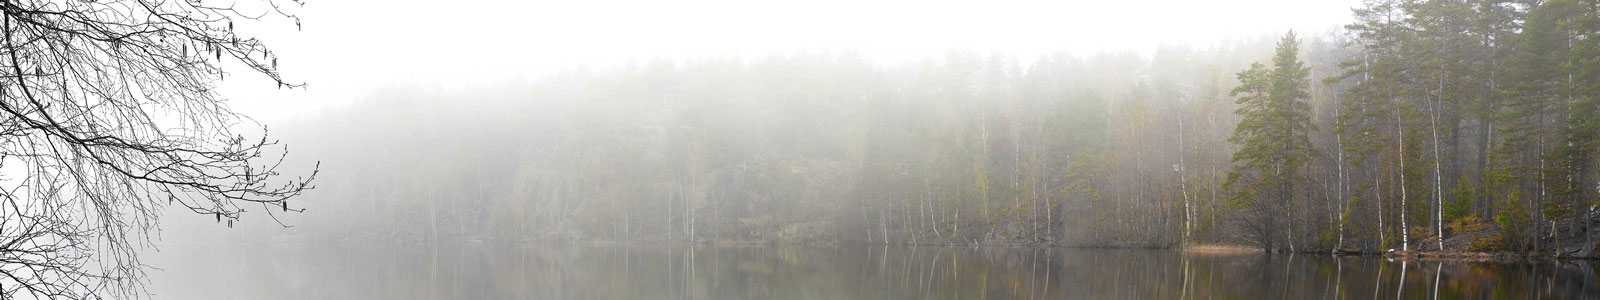 №4414 - Утренний туман над озером в Карелии